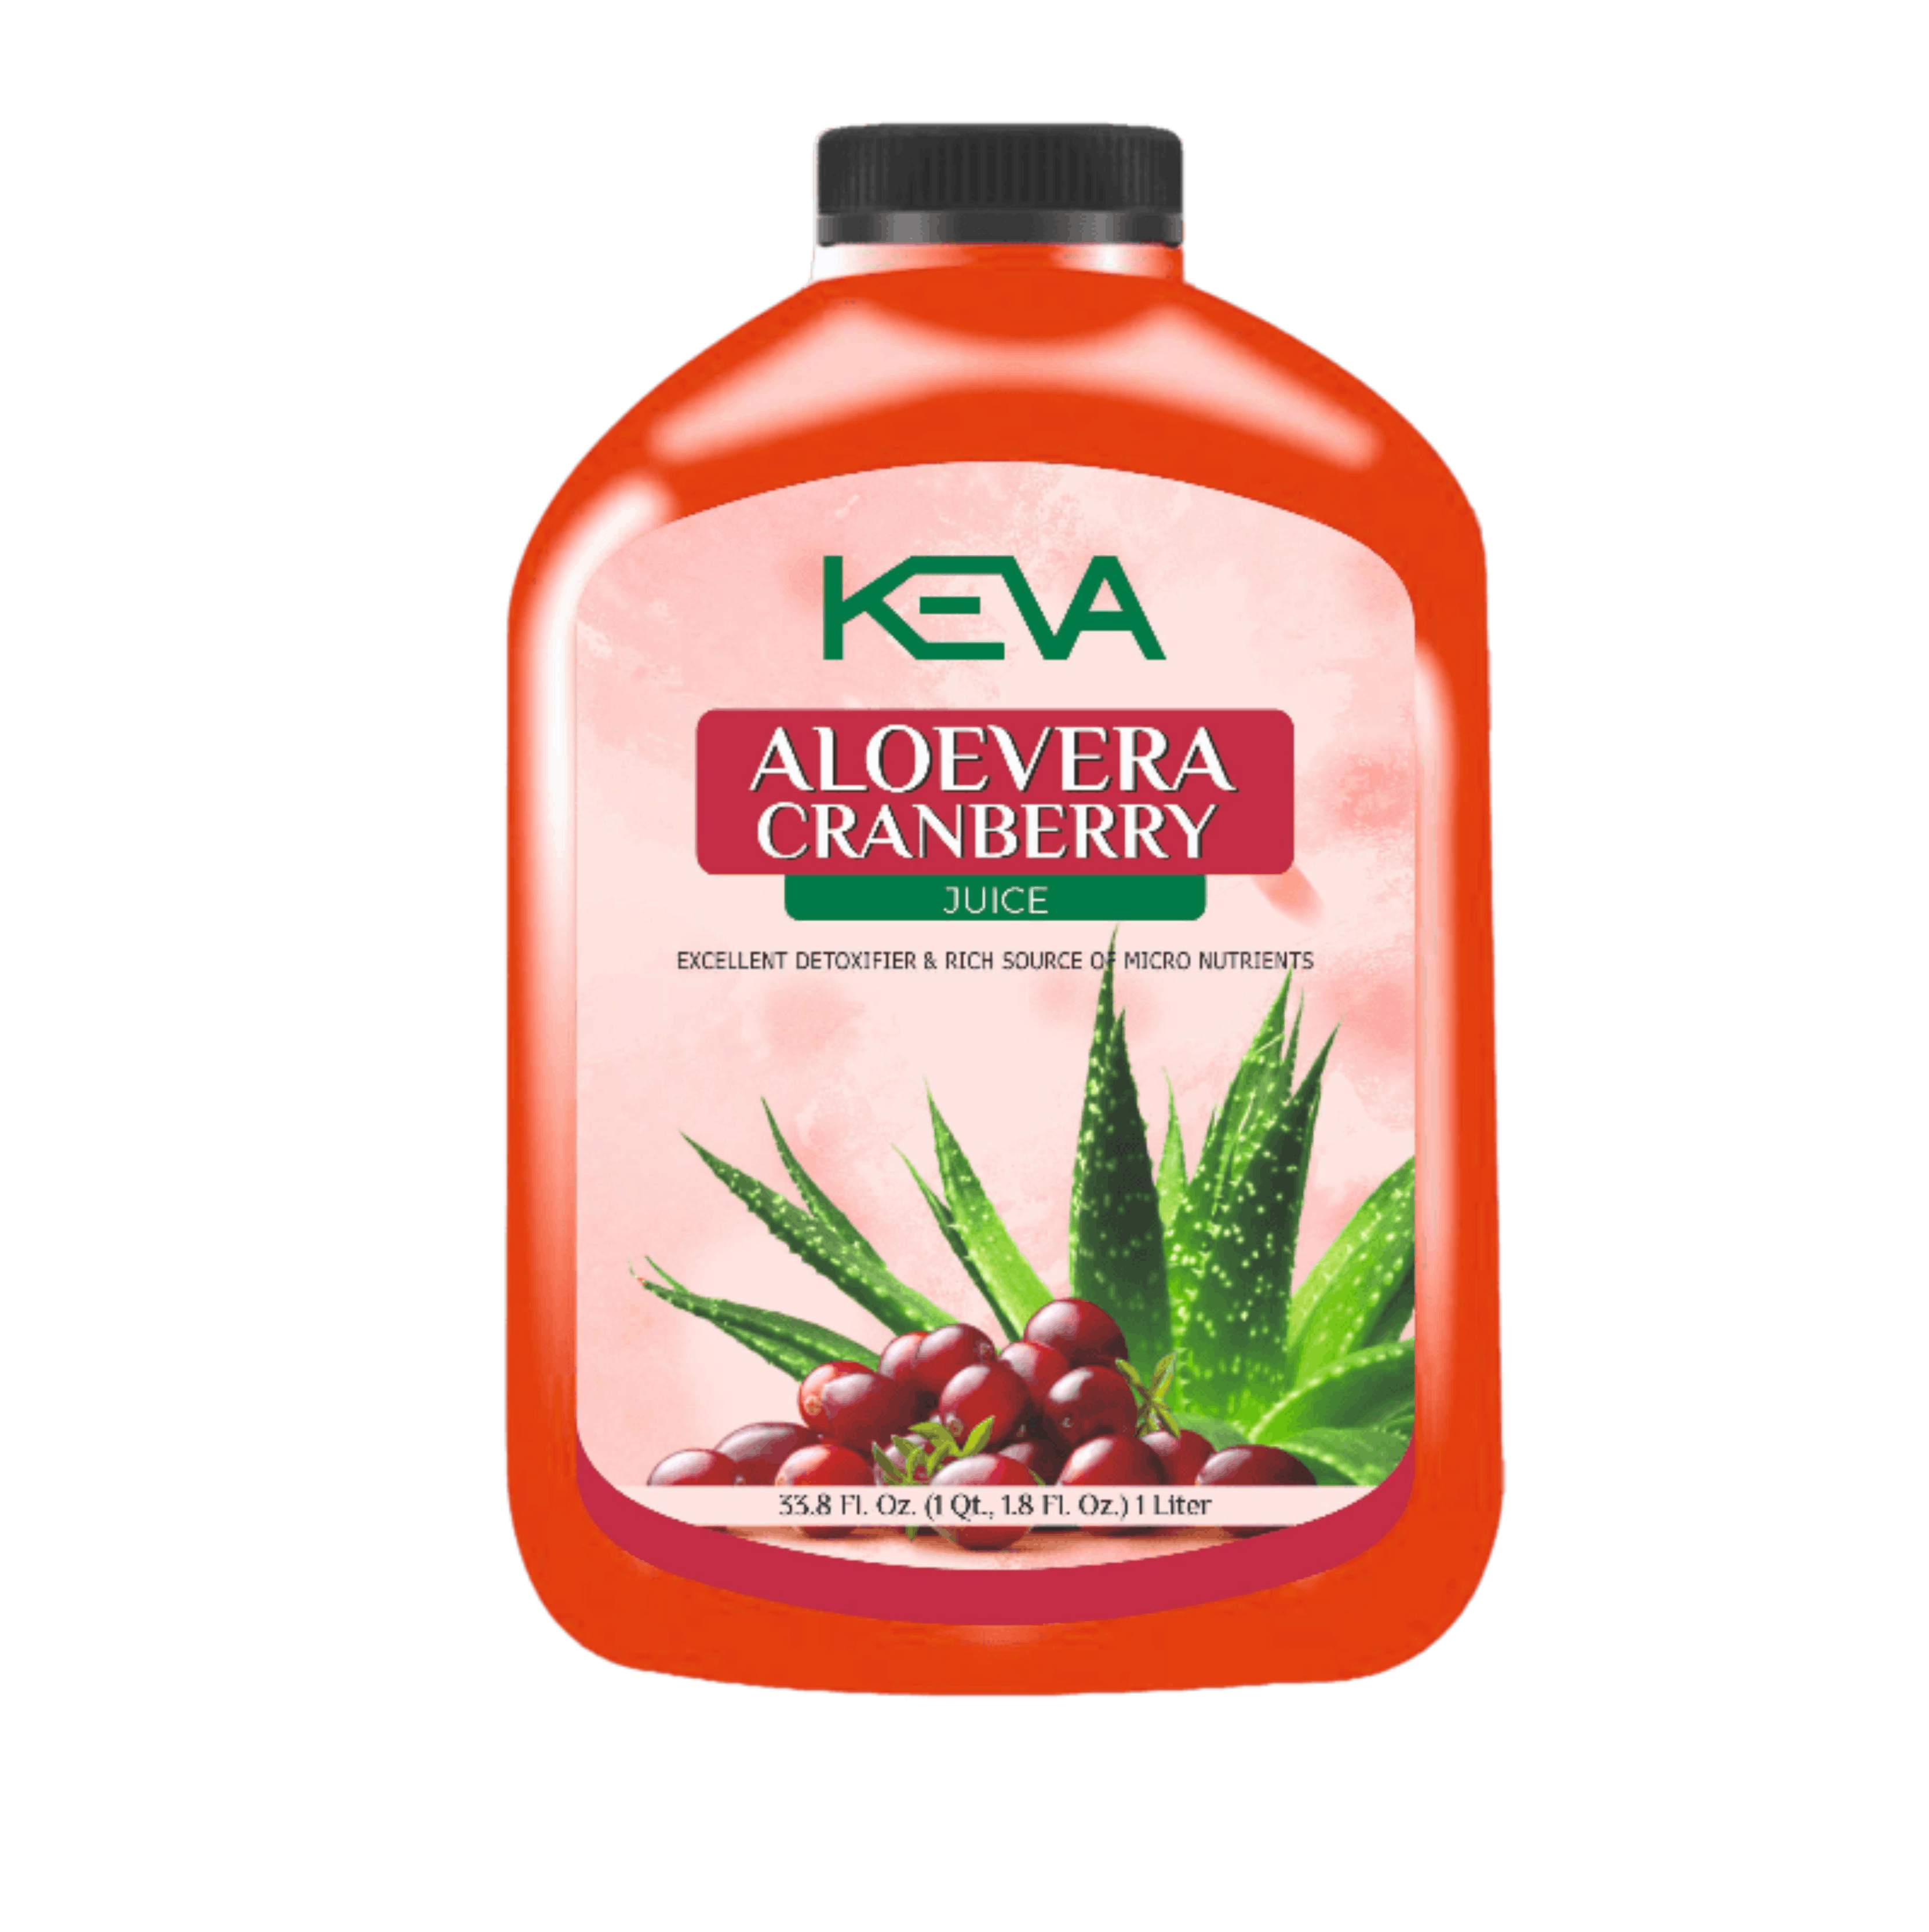 KEVA Aloe Vera Cranberry Juice